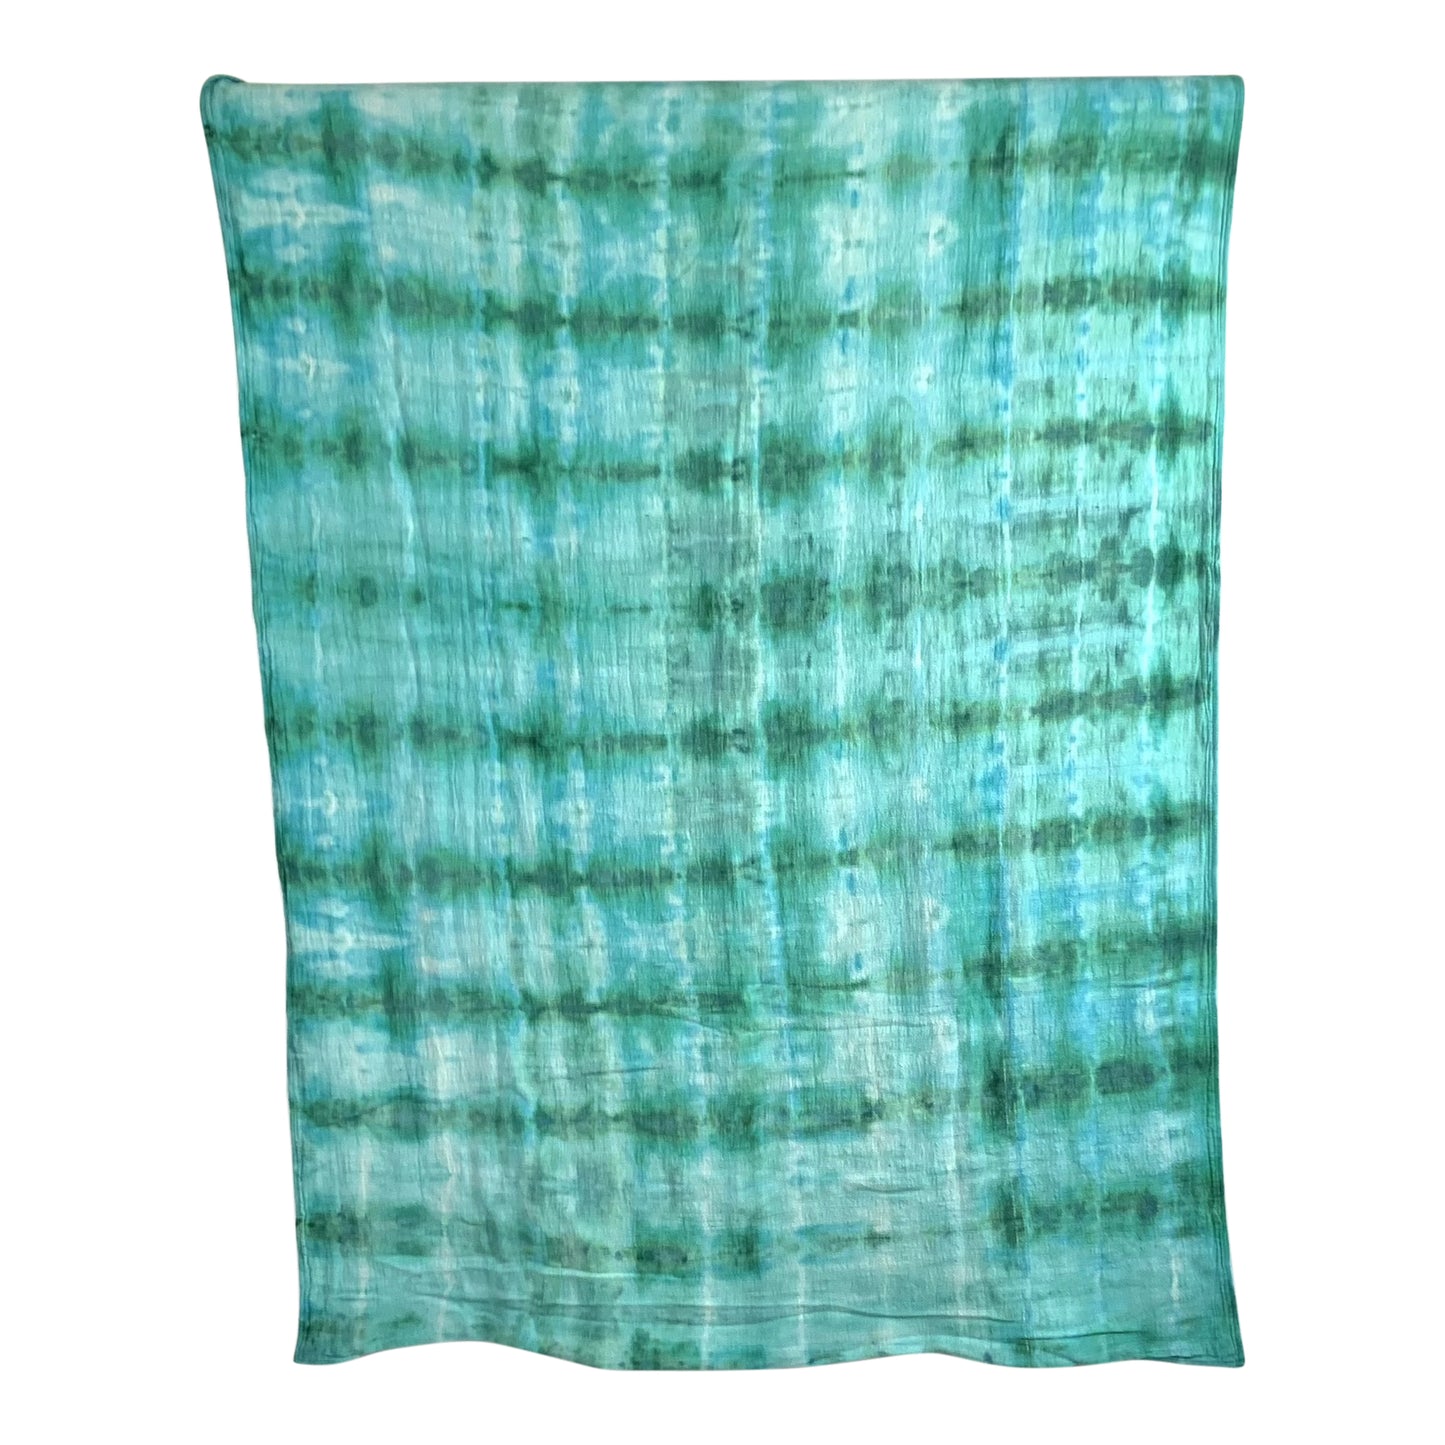 The Birch Blanket: Emerald Kaleidoscope